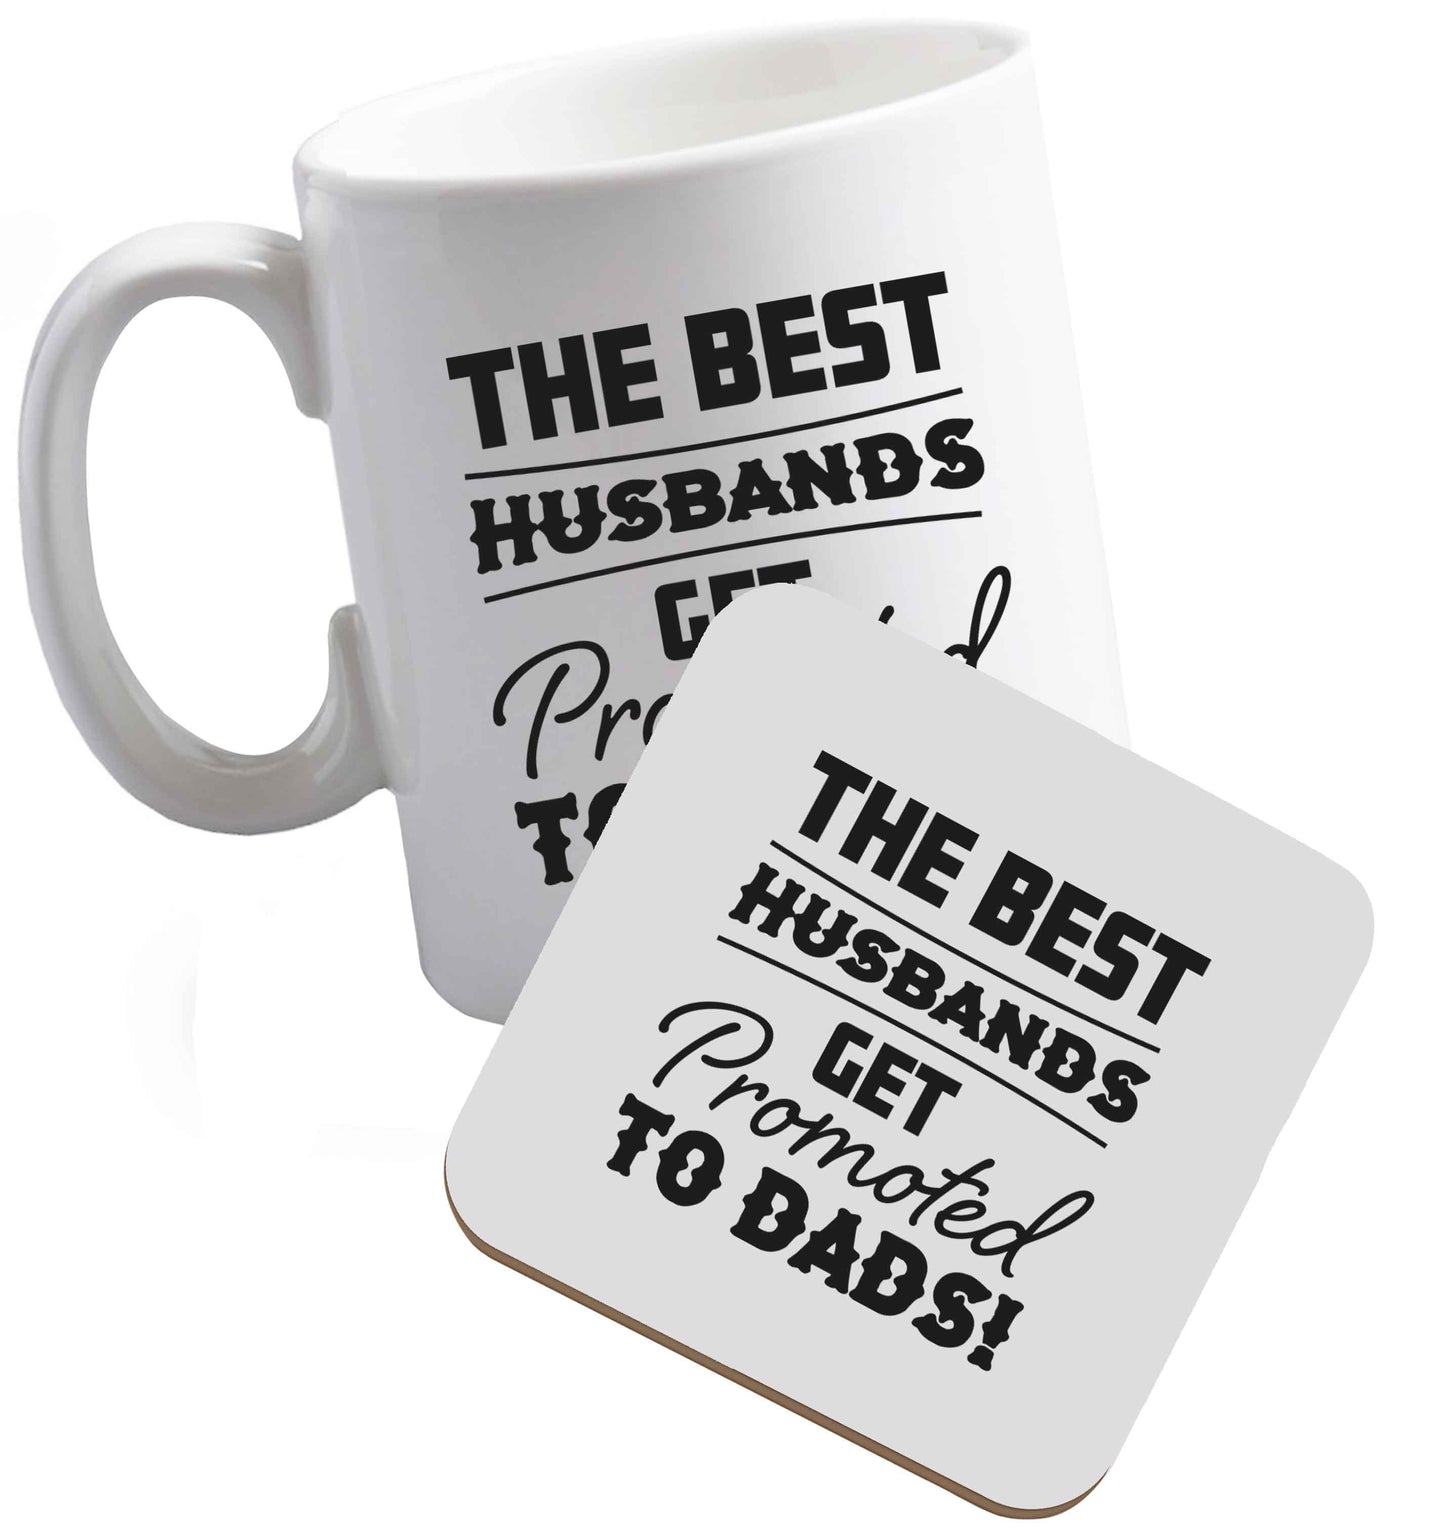 10 oz The best husbands get promoted to Dads ceramic mug and coaster set right handed